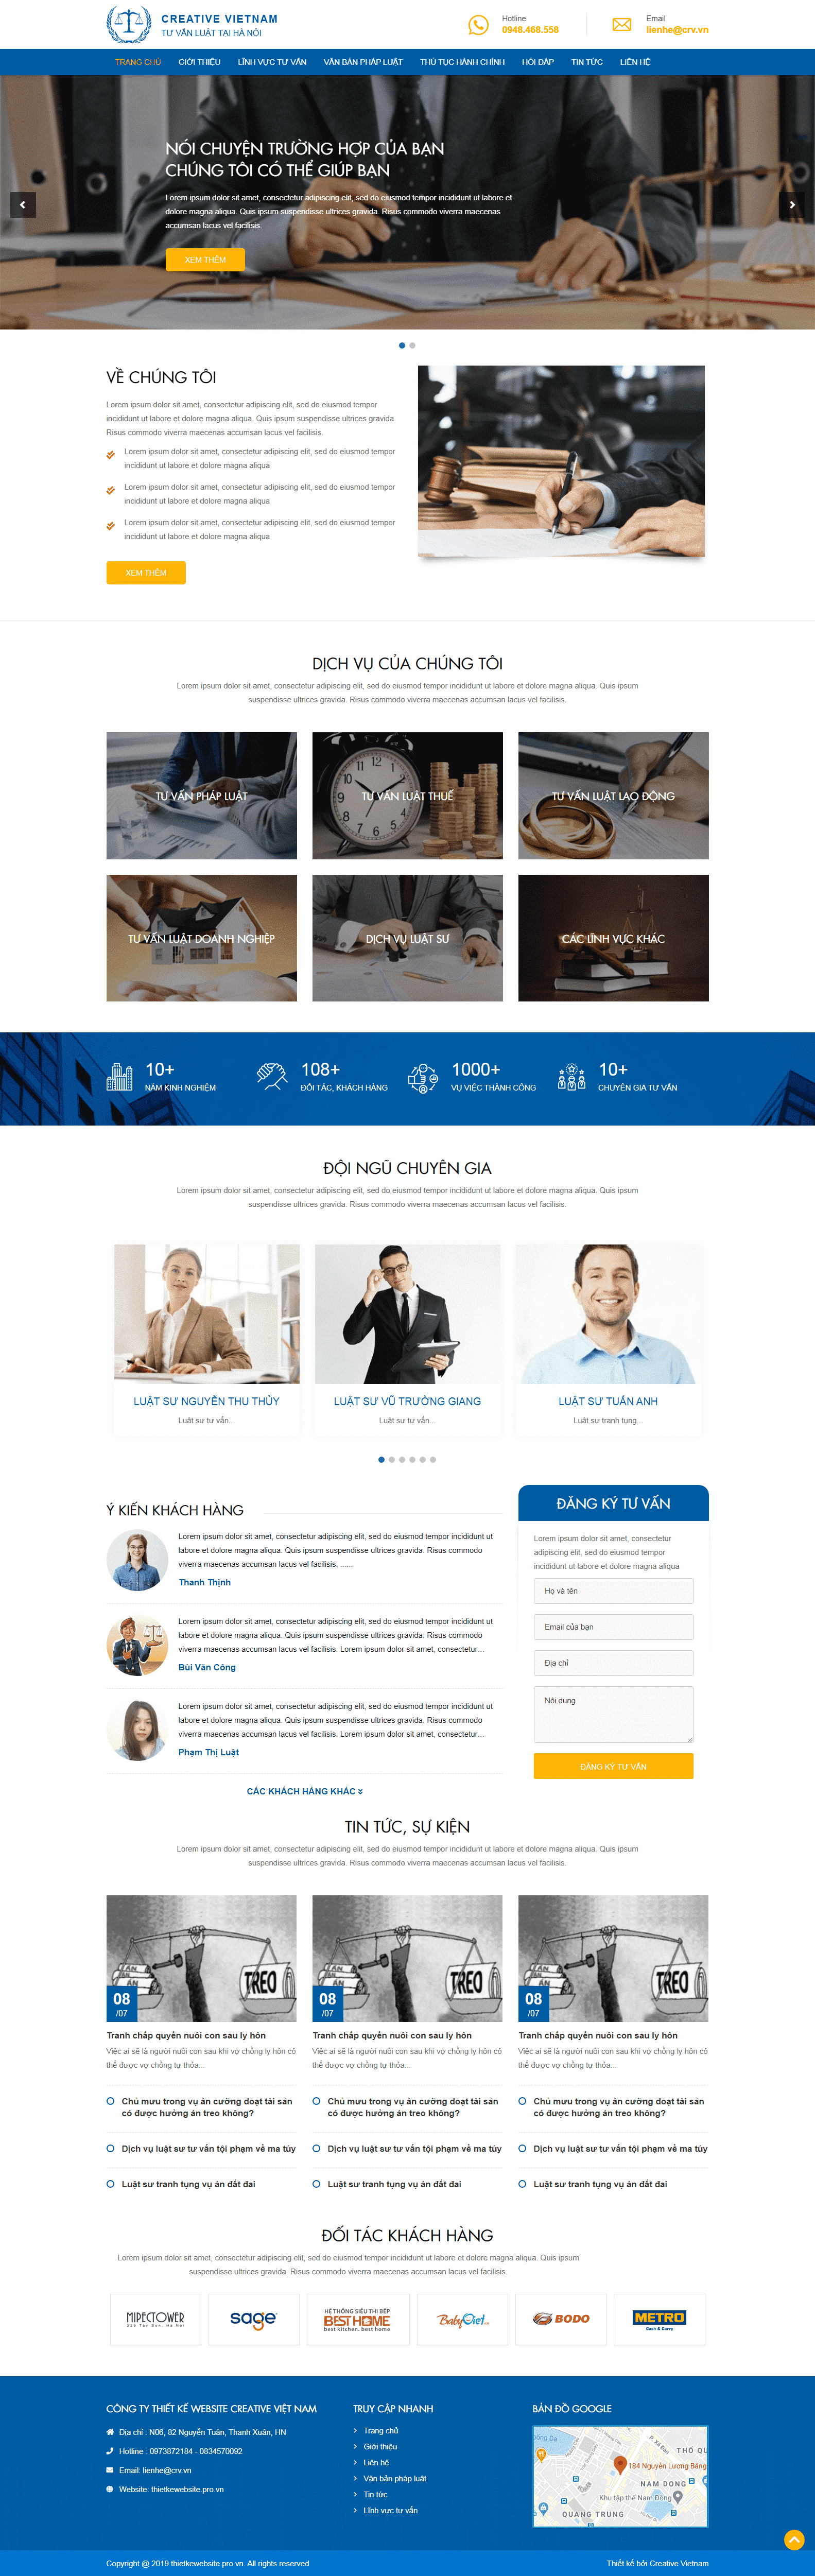 template website design portfolio free